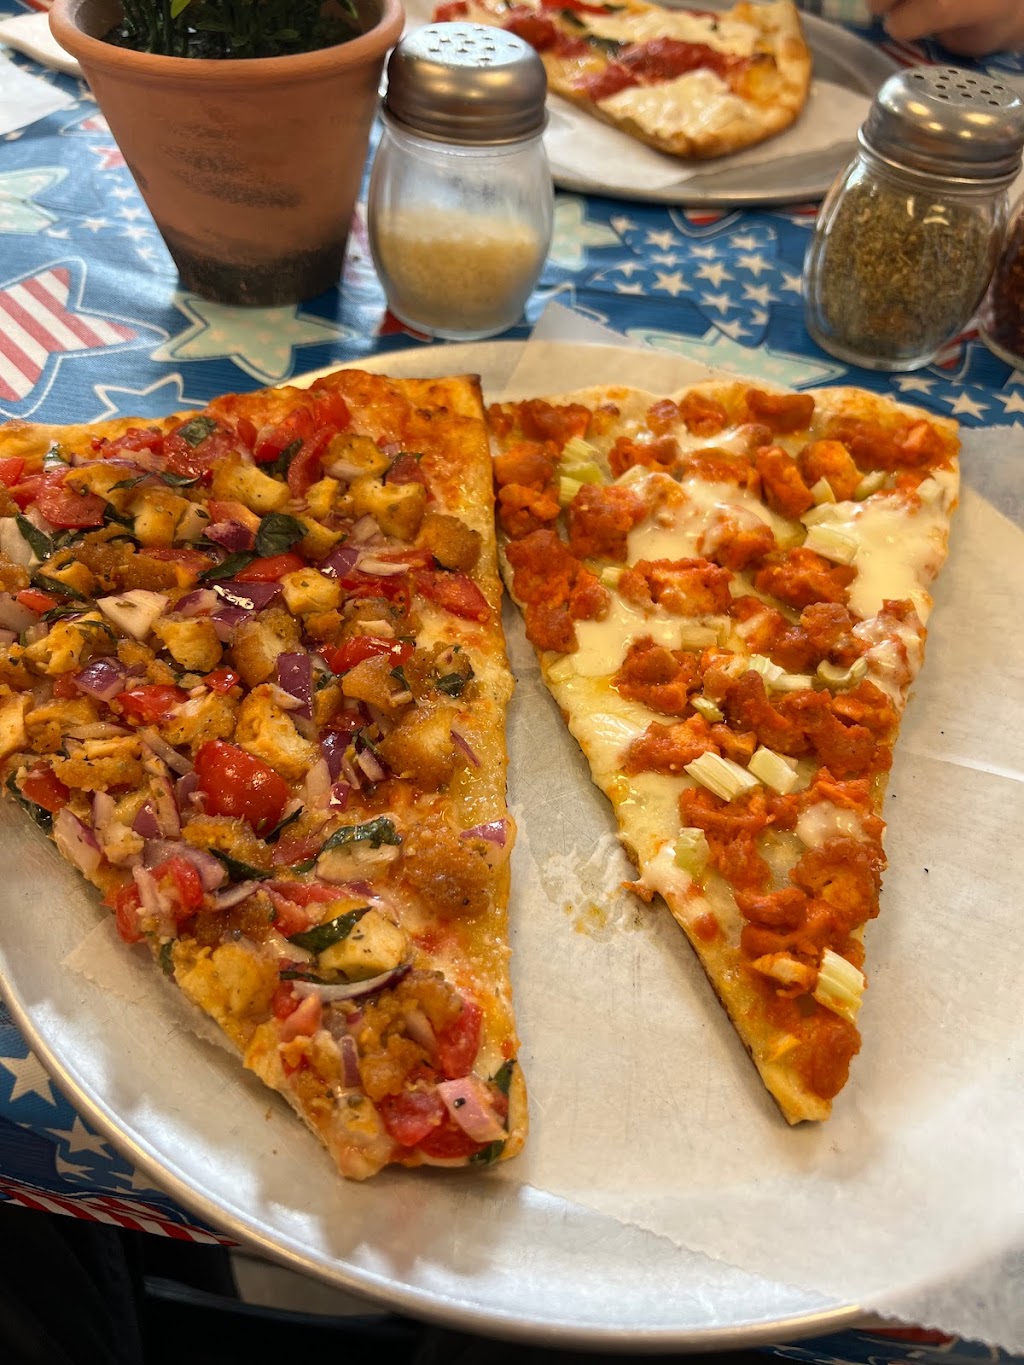 Venice Pizza & Trattoria | 731 N Broadway, North White Plains, NY 10603, USA | Phone: (914) 615-9460